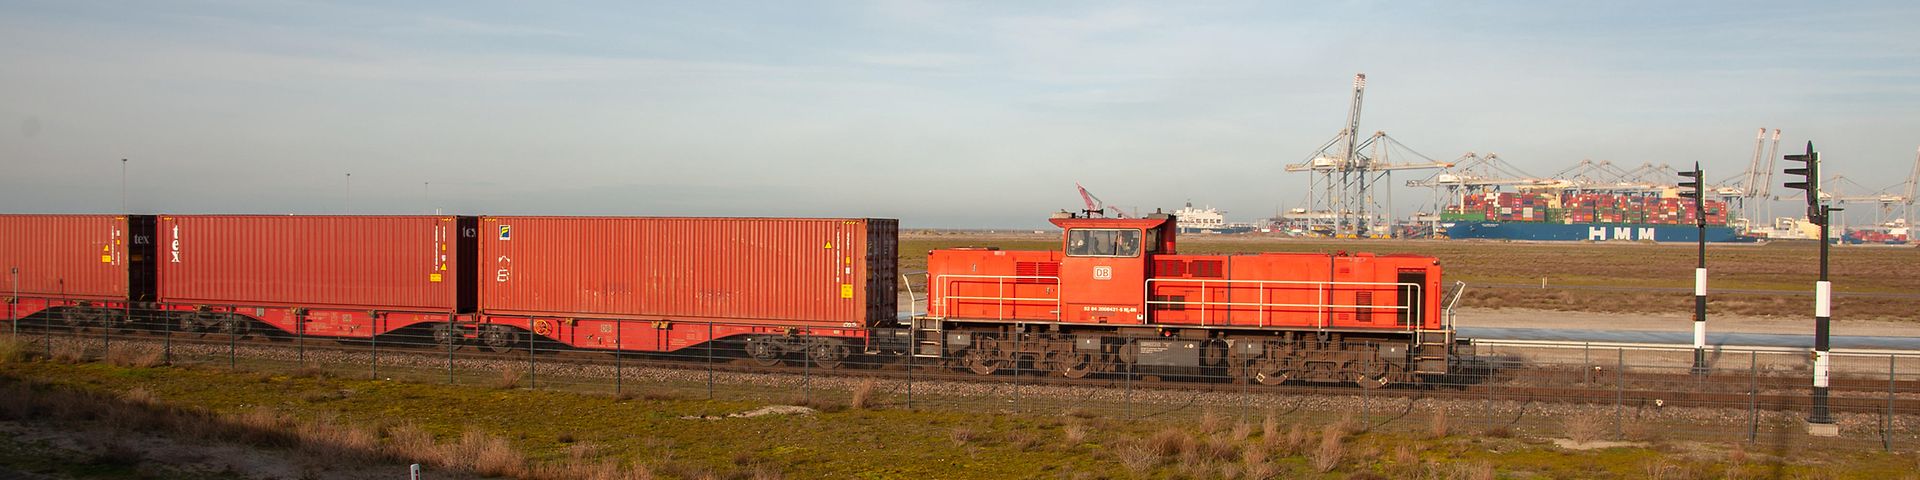 DB Westports Intermodaal Maasvlakte-7897